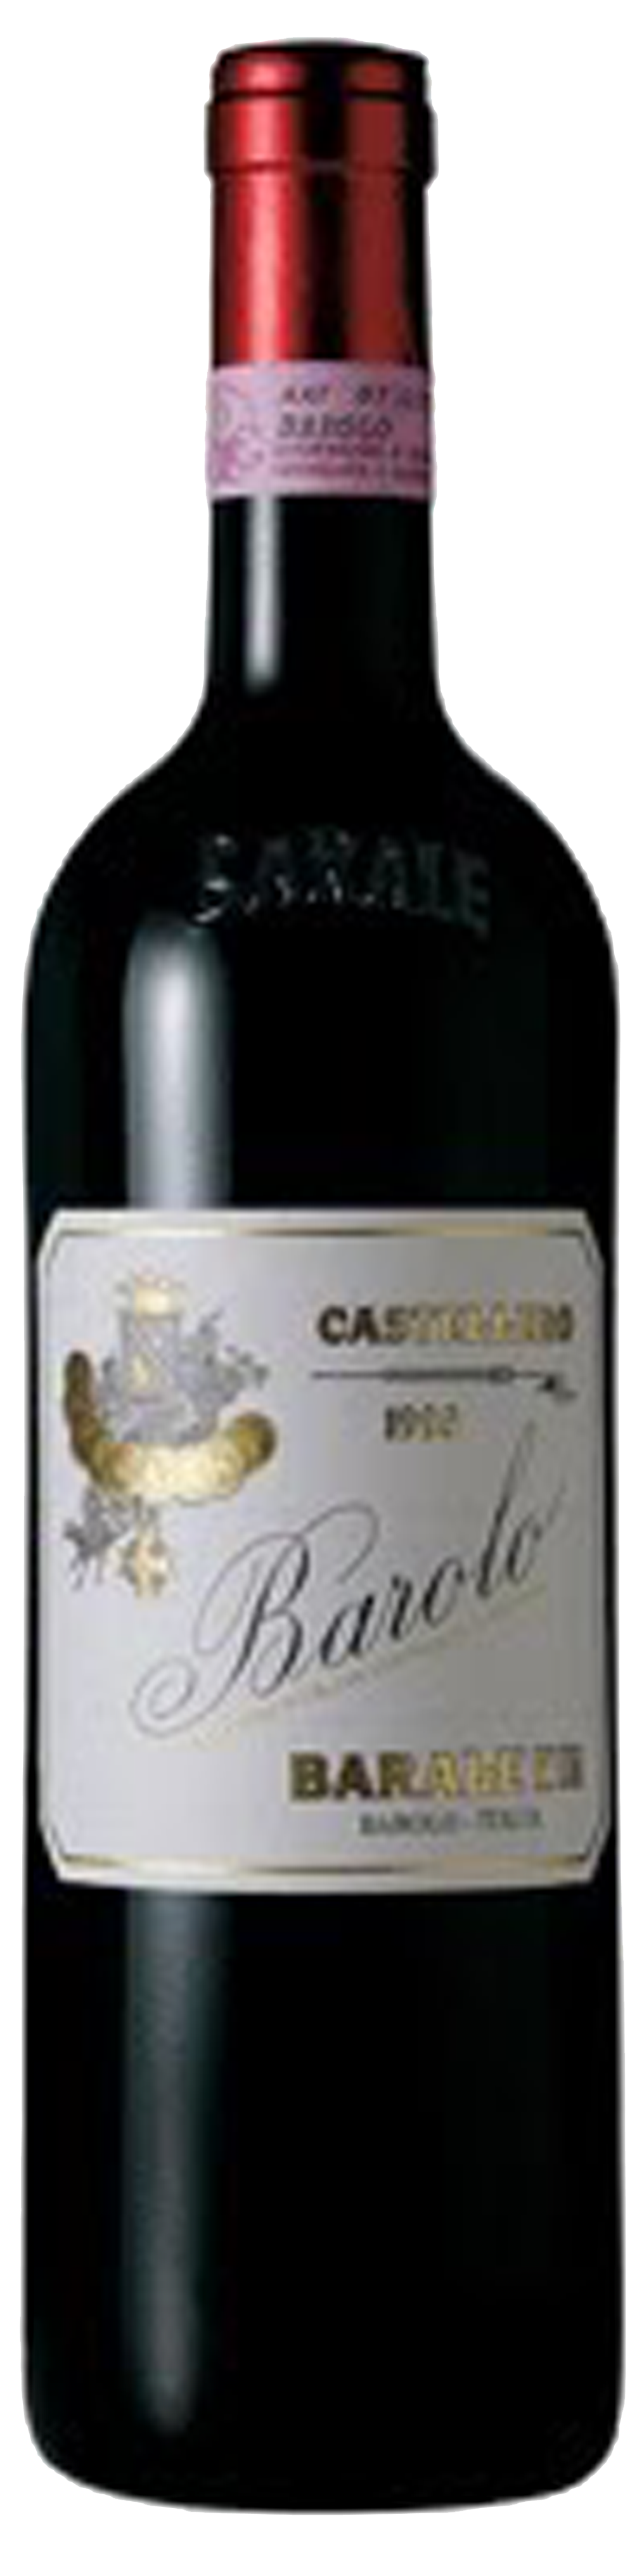 Bottle shot of 2011 Barolo Castellero